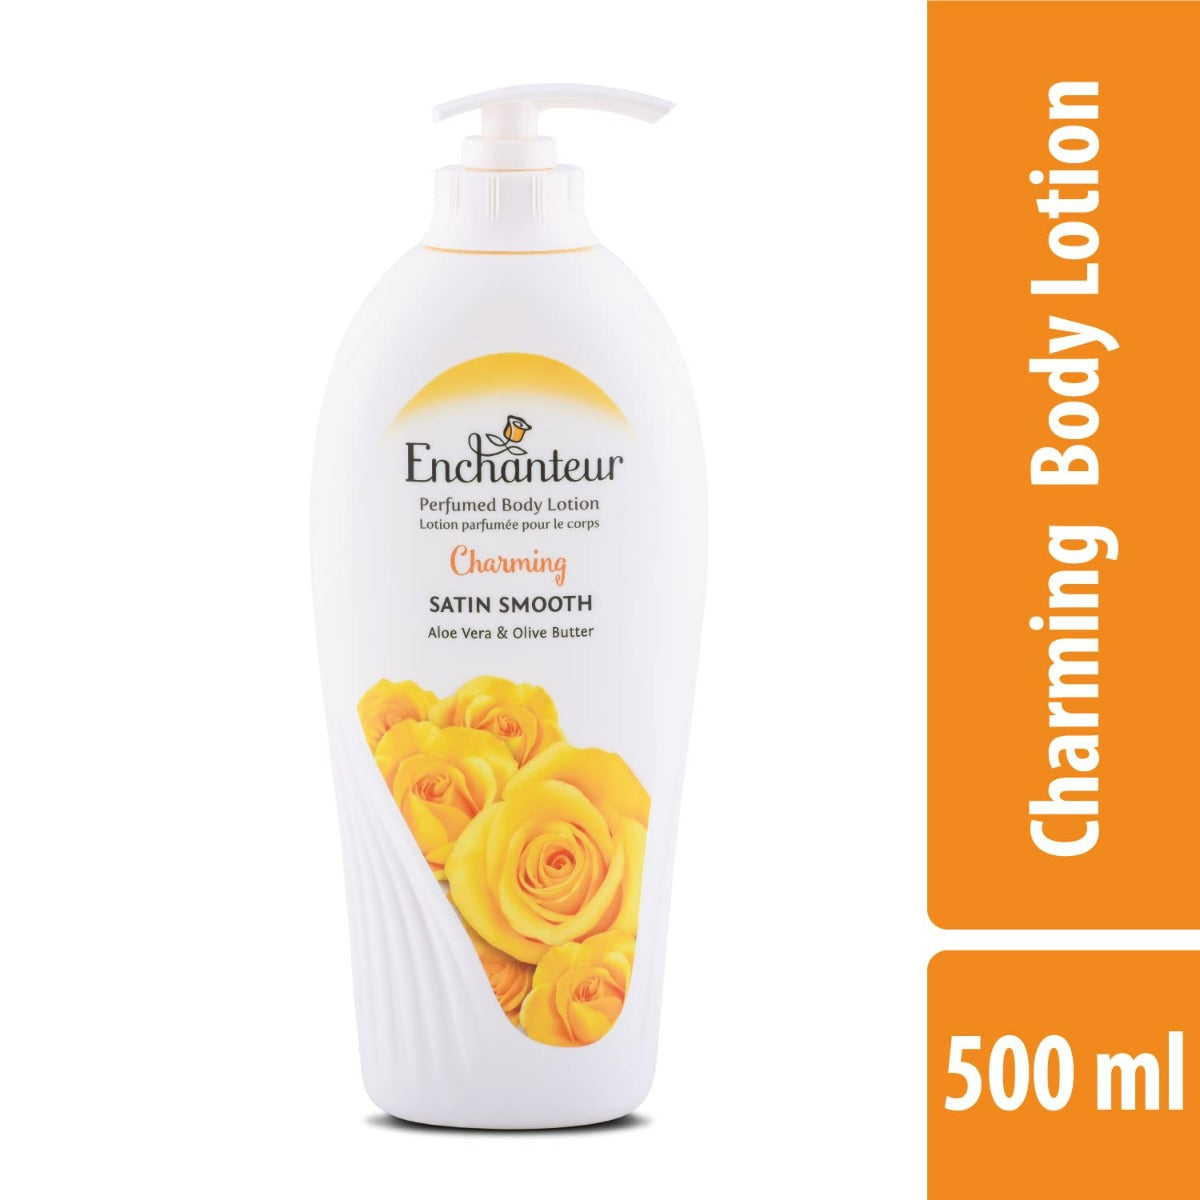 Enchanteur Perfumed Body Lotion (500ml)